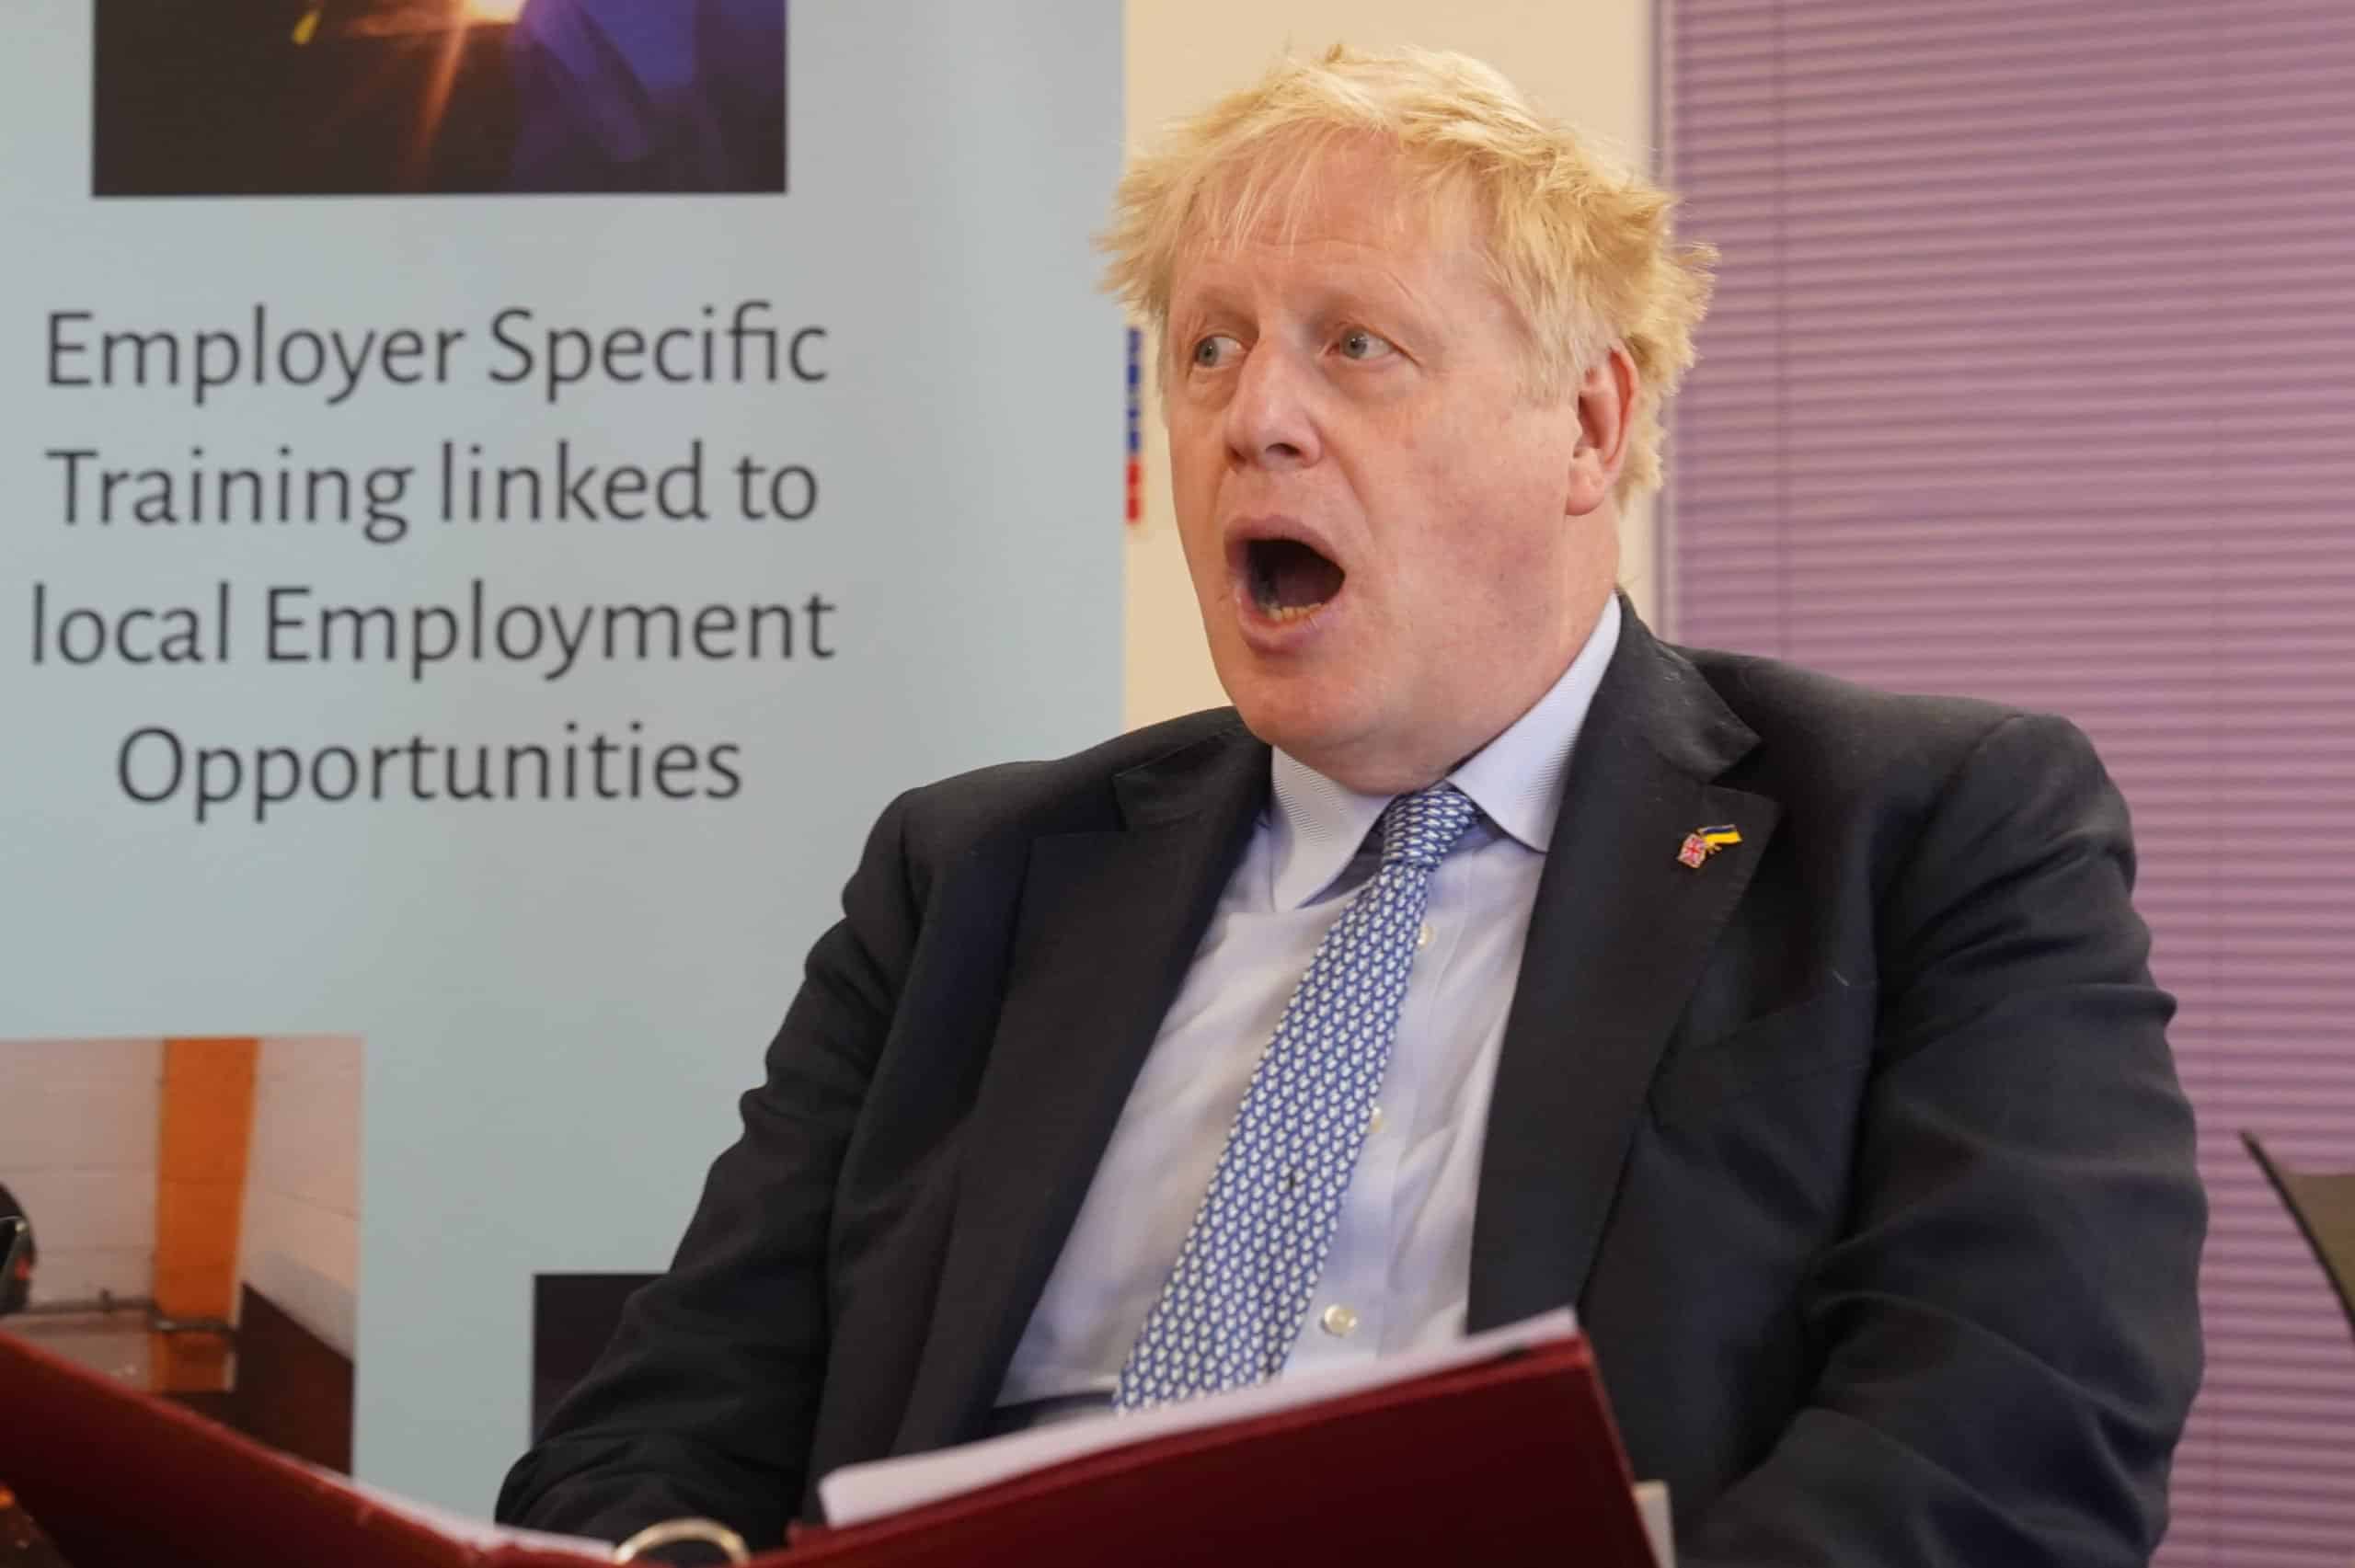 5 times Boris Johnson wasted taxpayers’ money